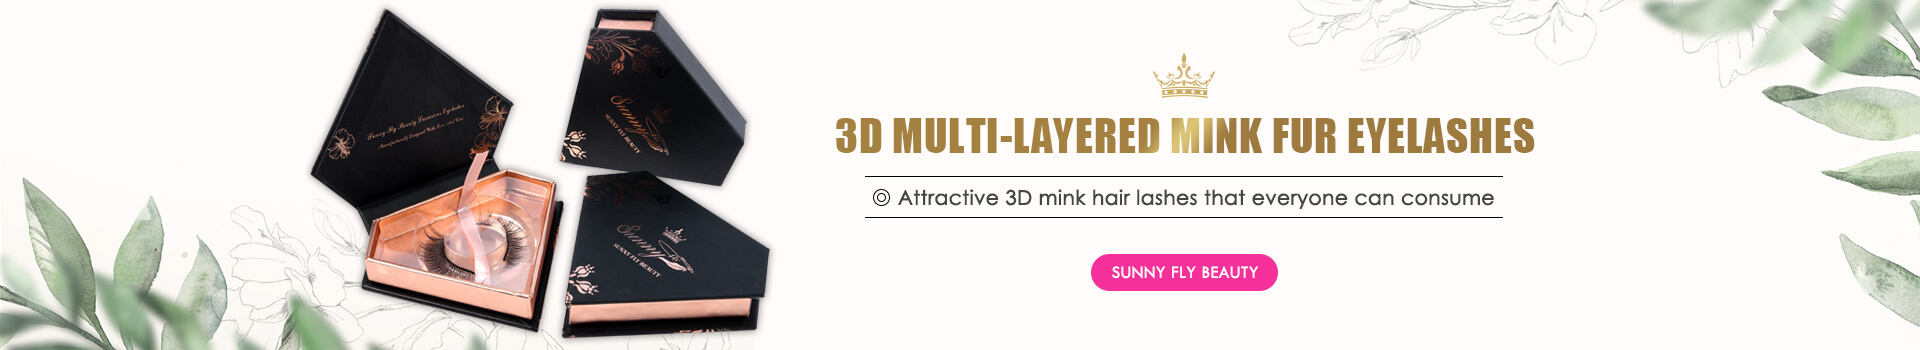 3D Multi-layered Mink Fur Eyelashes MG25